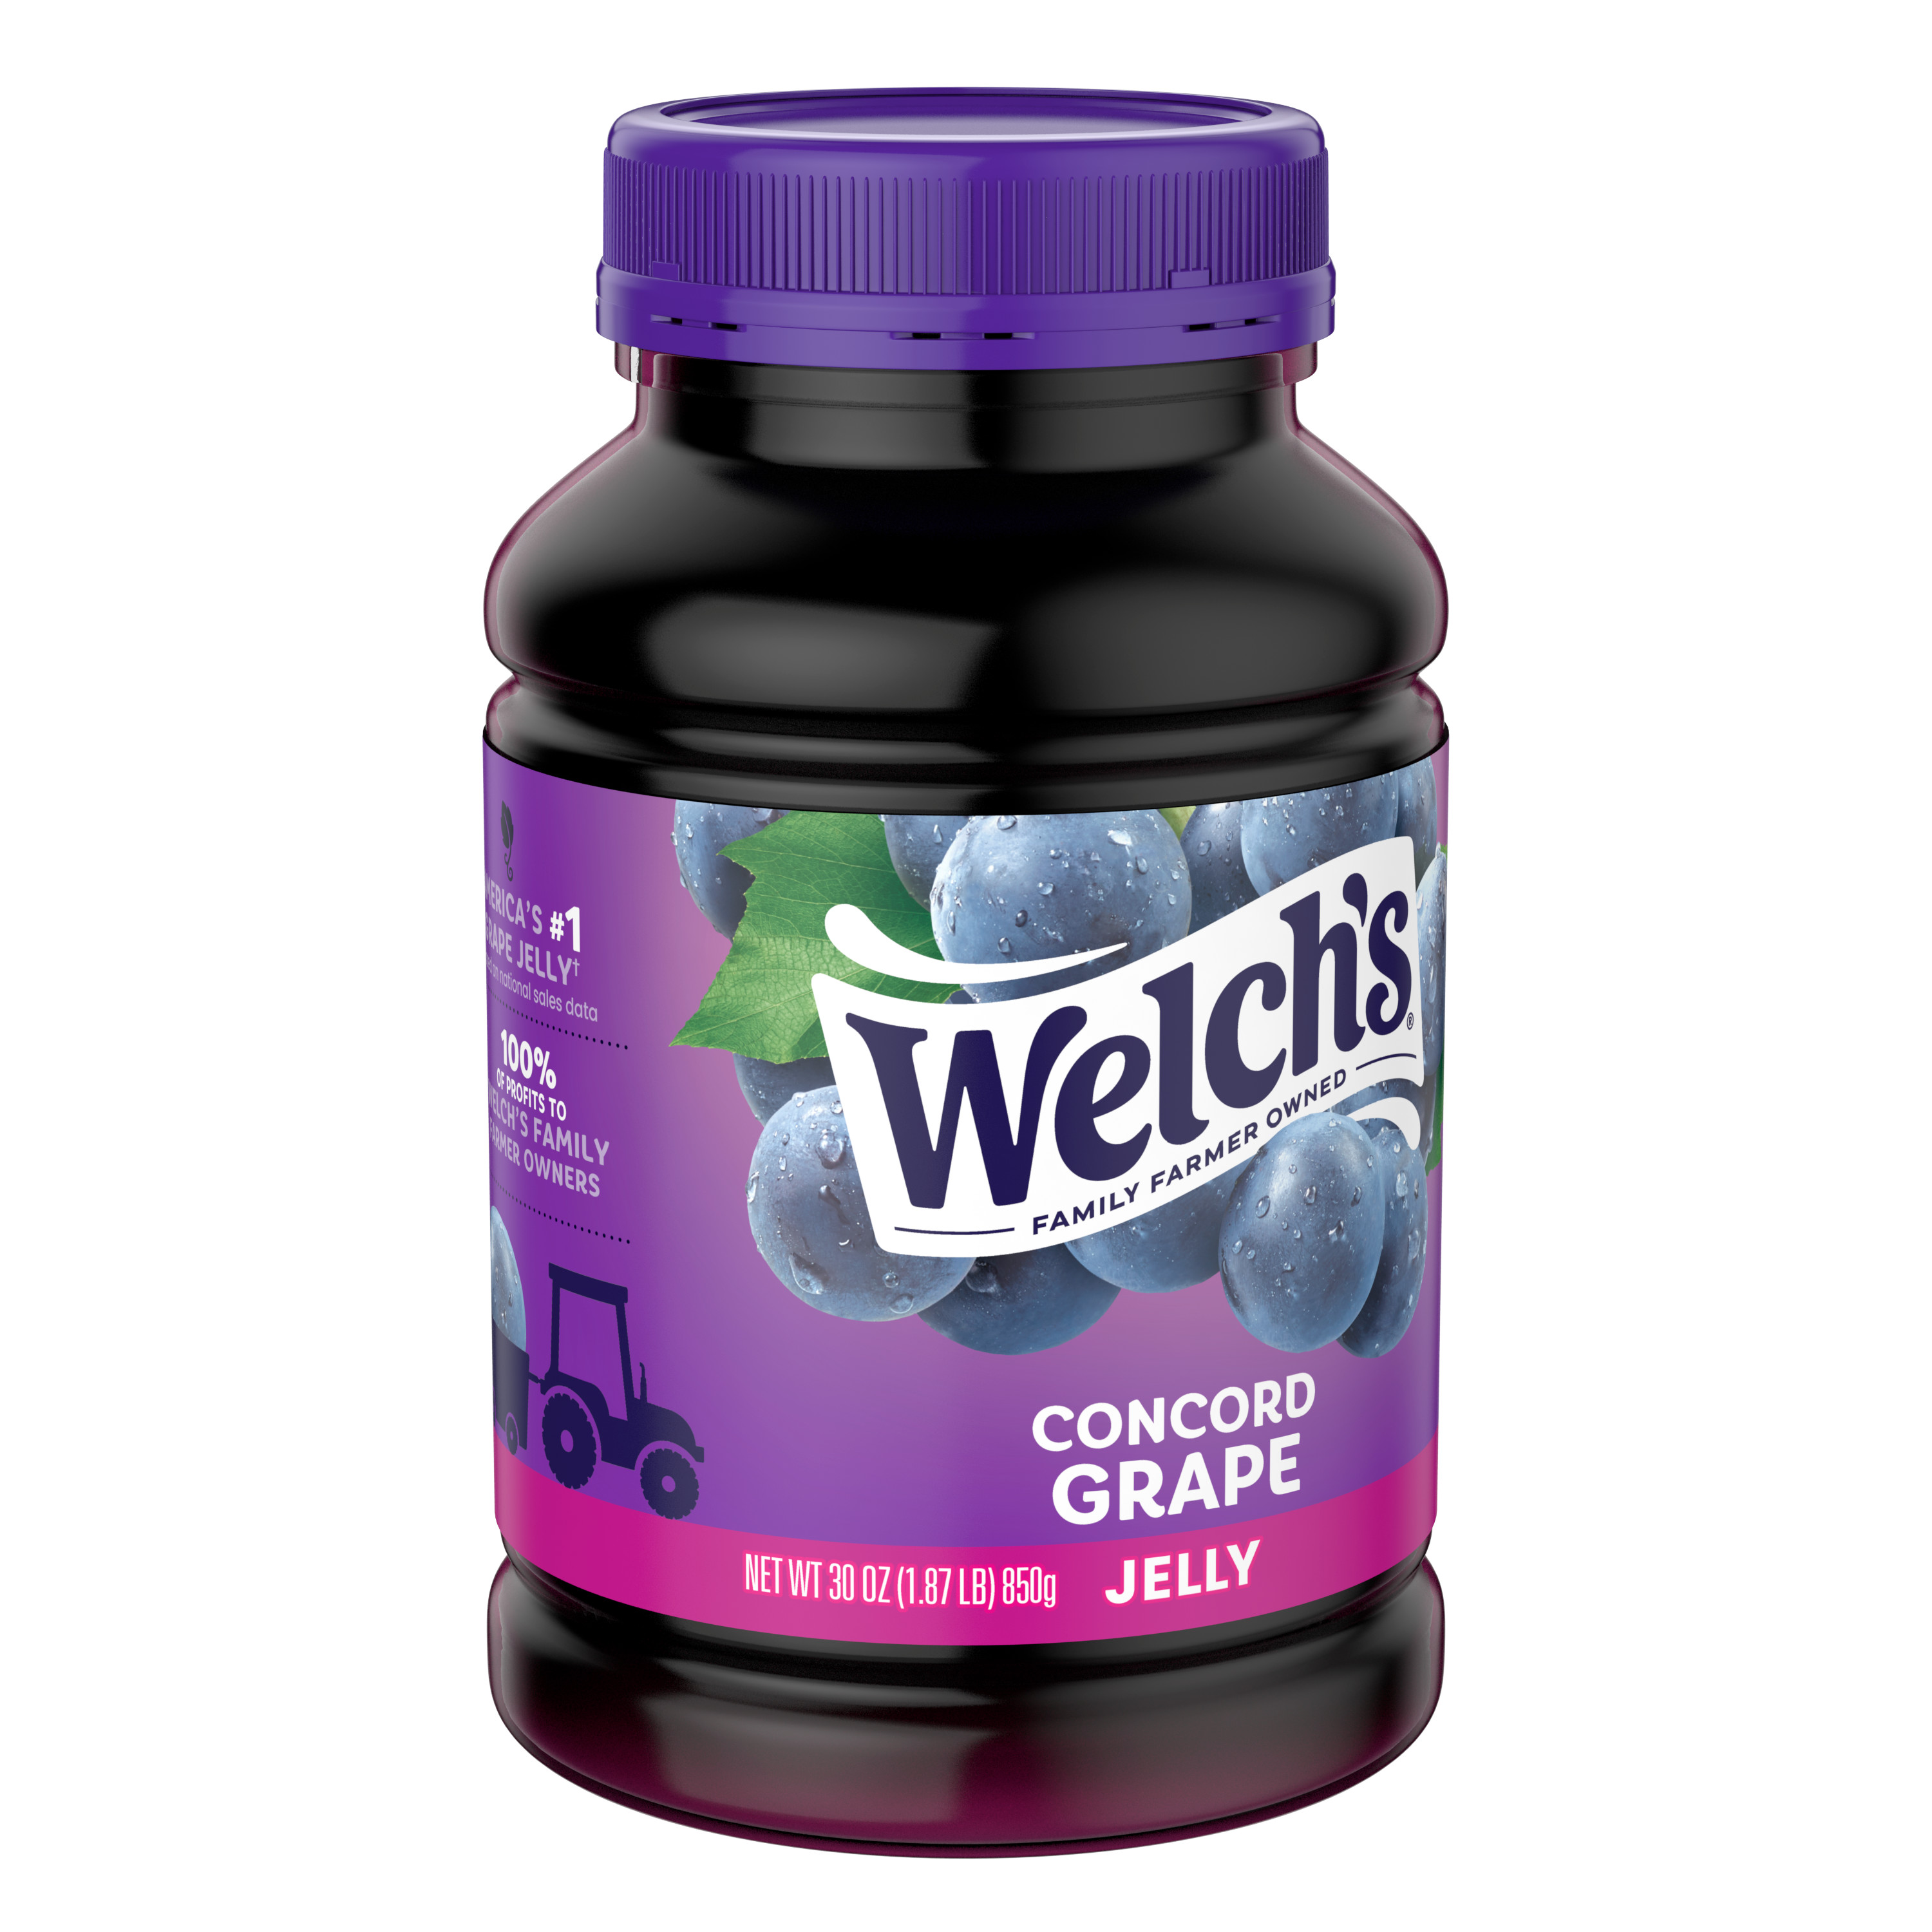 Welchs Concord Grape Jelly 30 Oz Jar